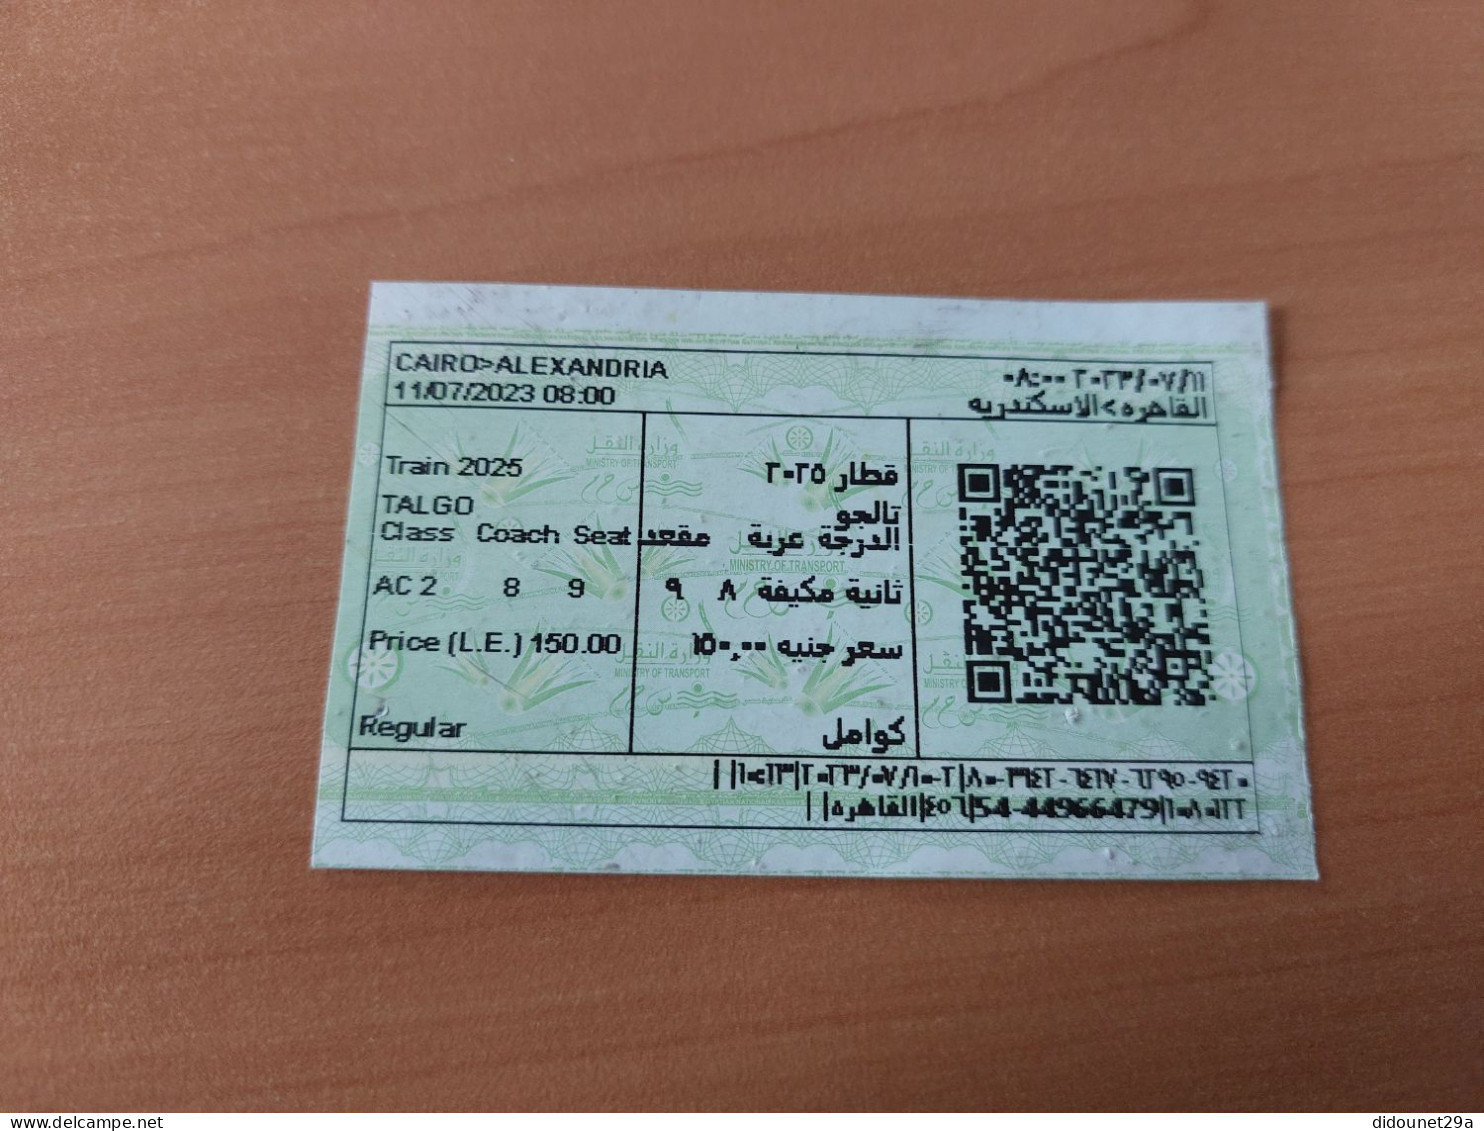 Ticket De Transport (train) "CAIRO - ALEXANDRIA" Egypte - Monde